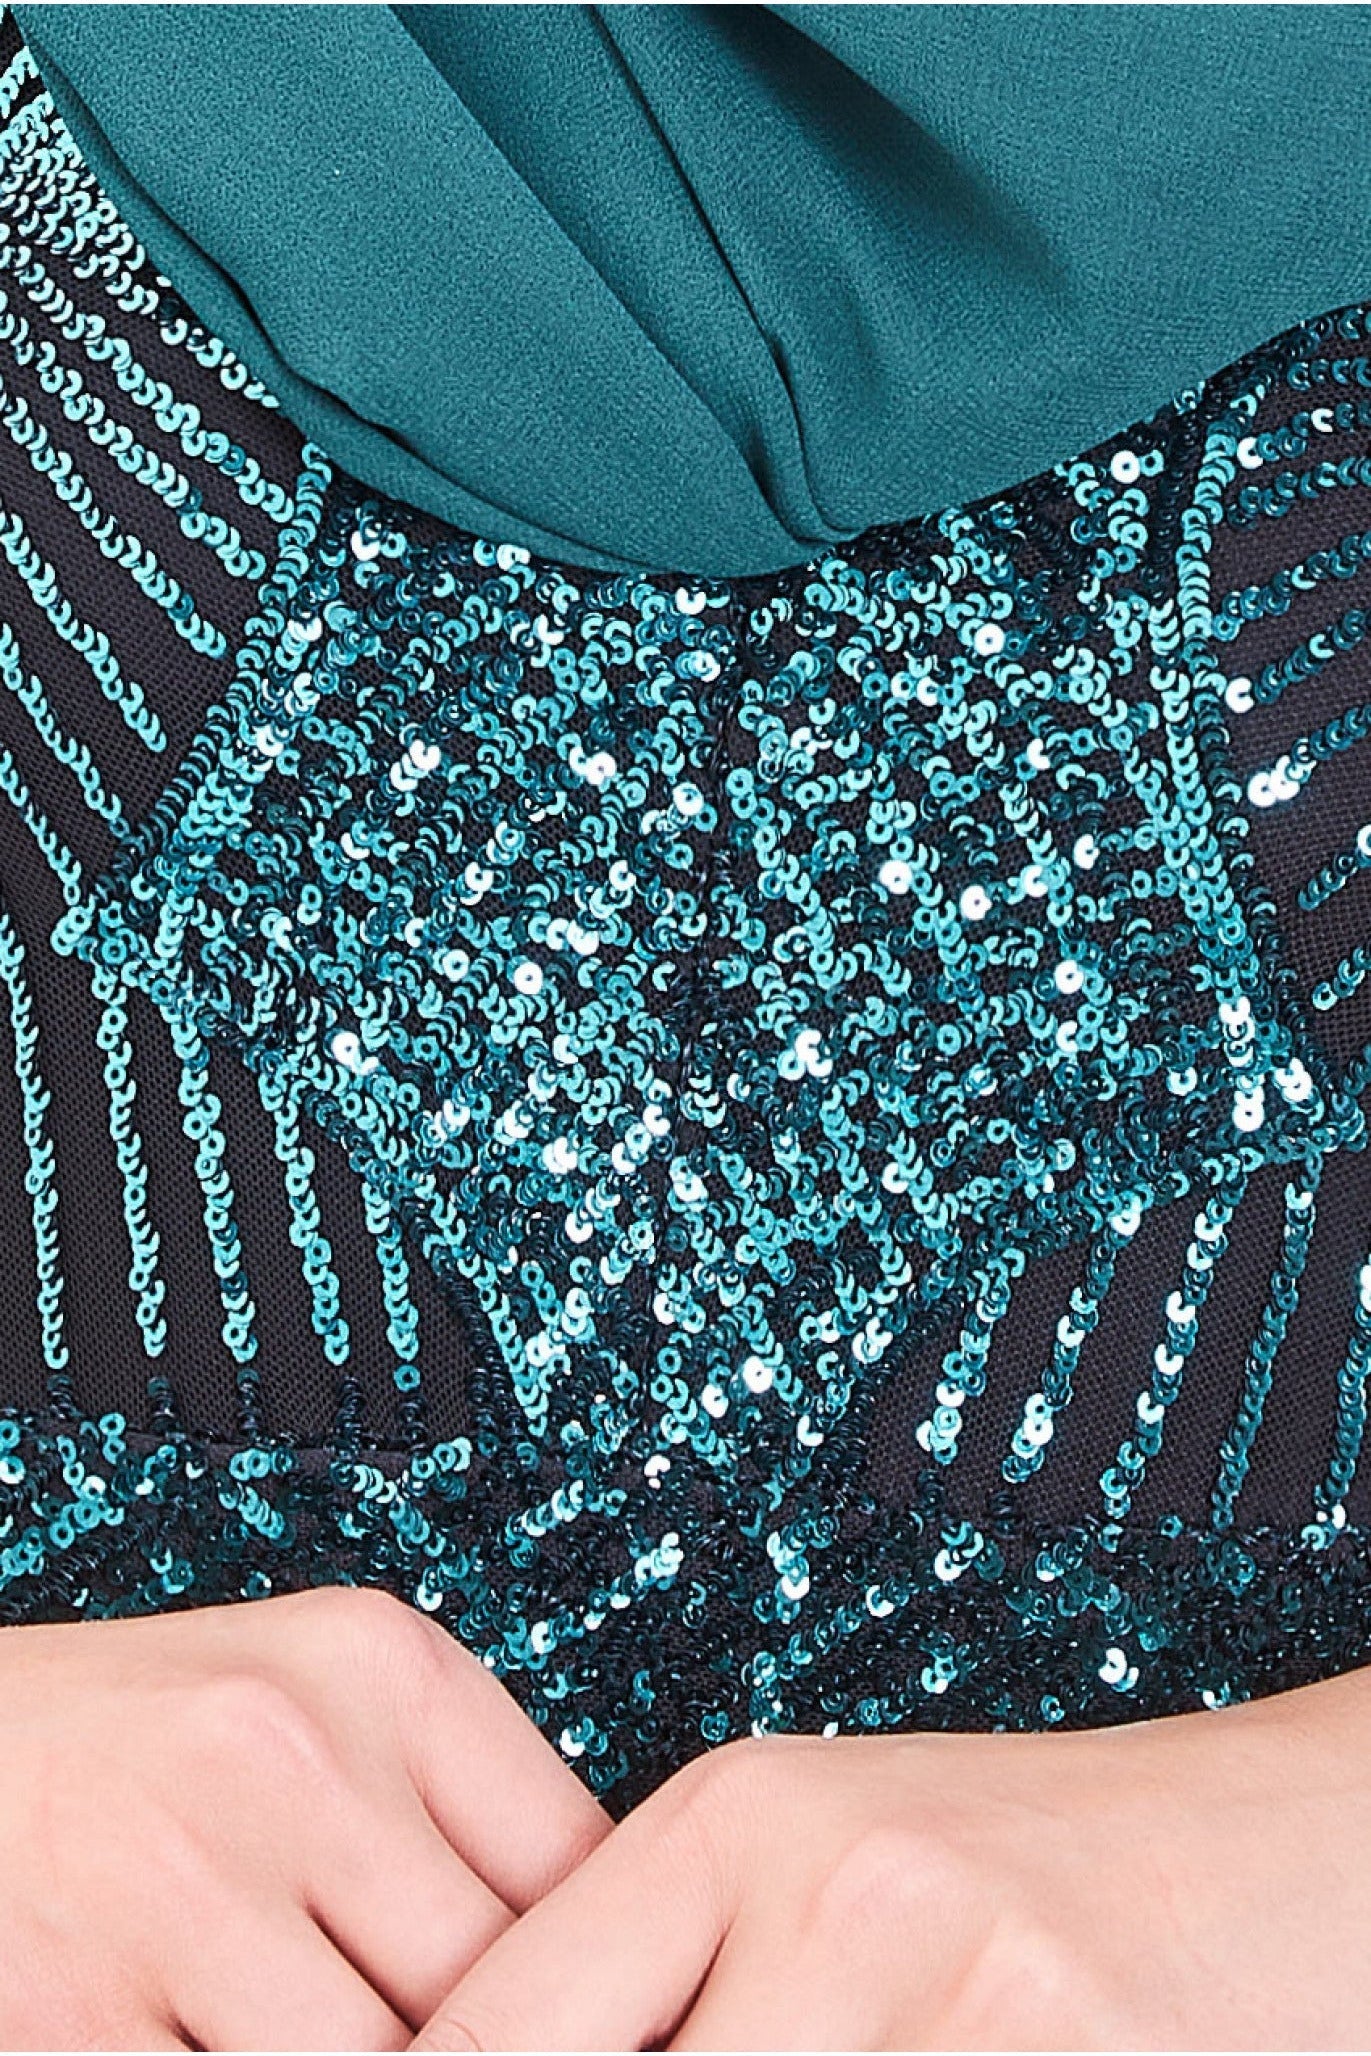 Modesty Starburst Sequin Maxi Dress - Emerald DR1824MOD